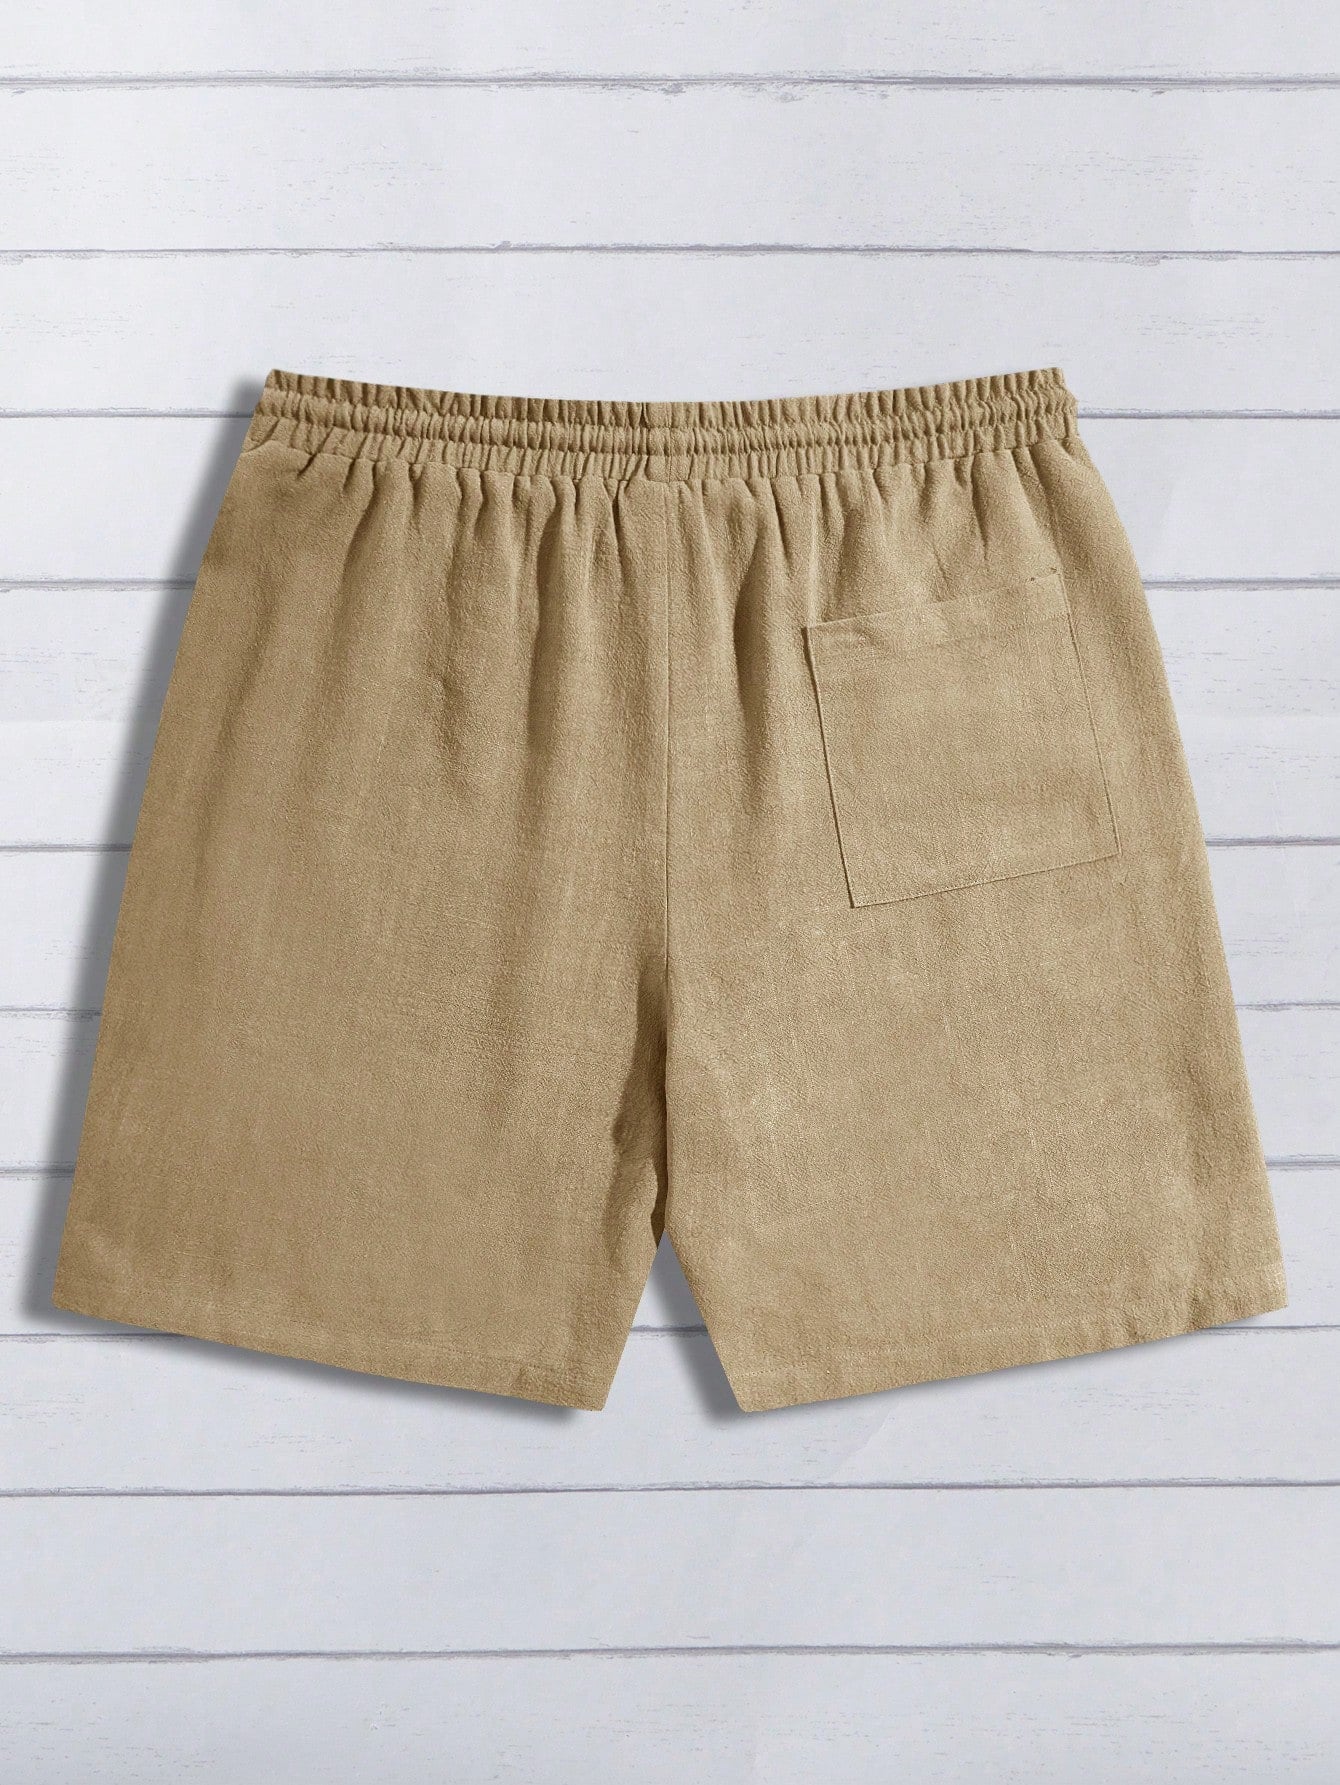 Men's Stylish Drawstring Waist Shorts.